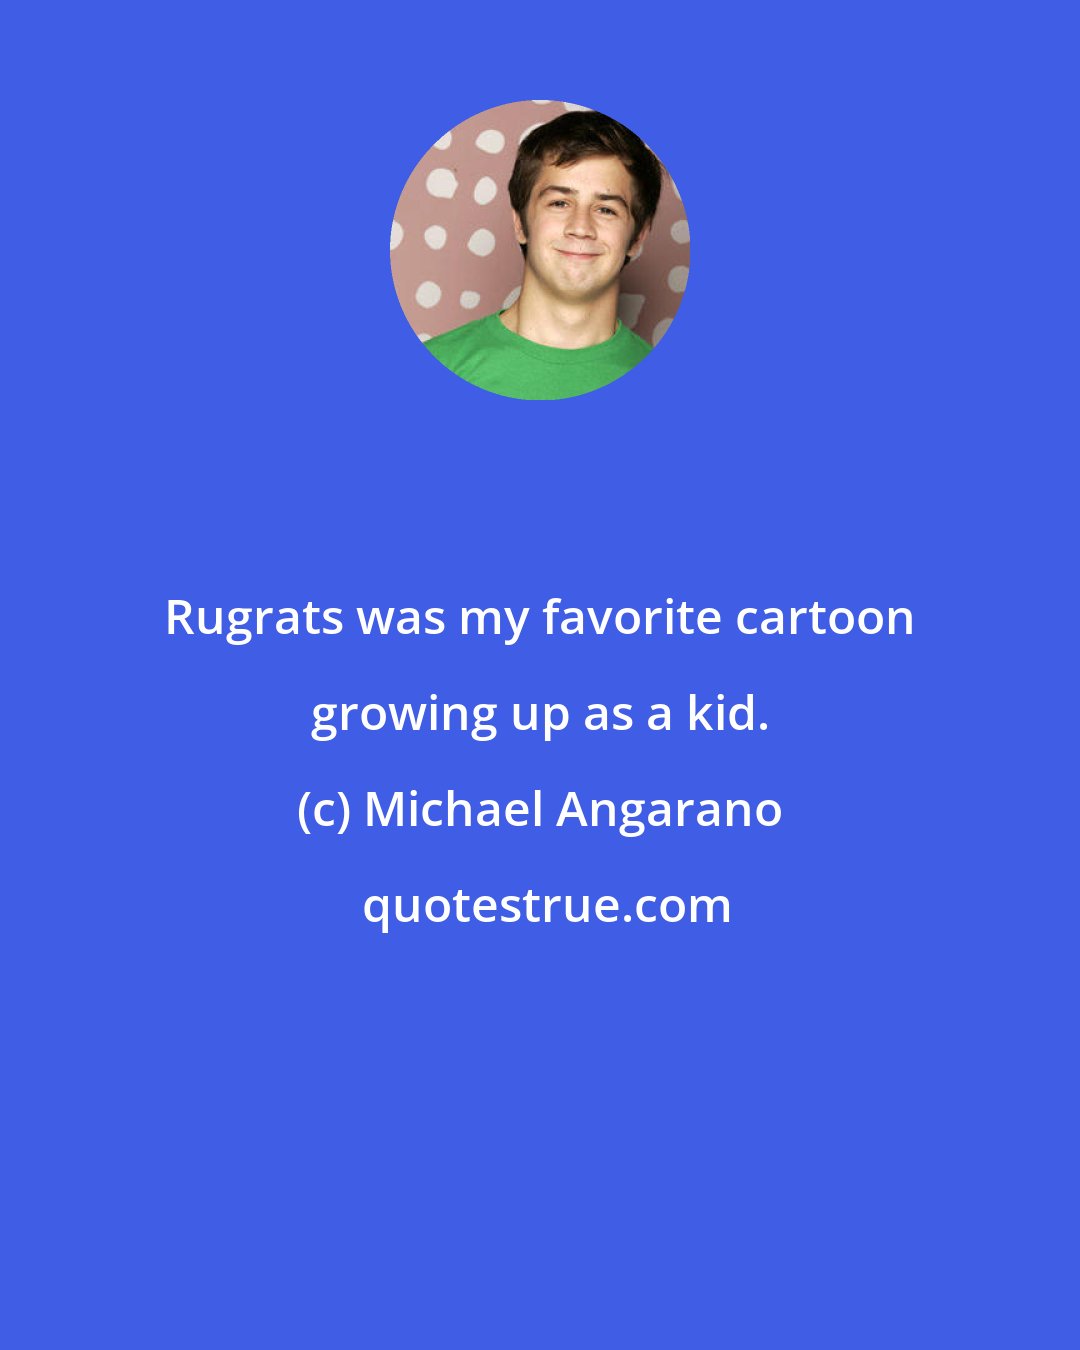 Michael Angarano: Rugrats was my favorite cartoon growing up as a kid.